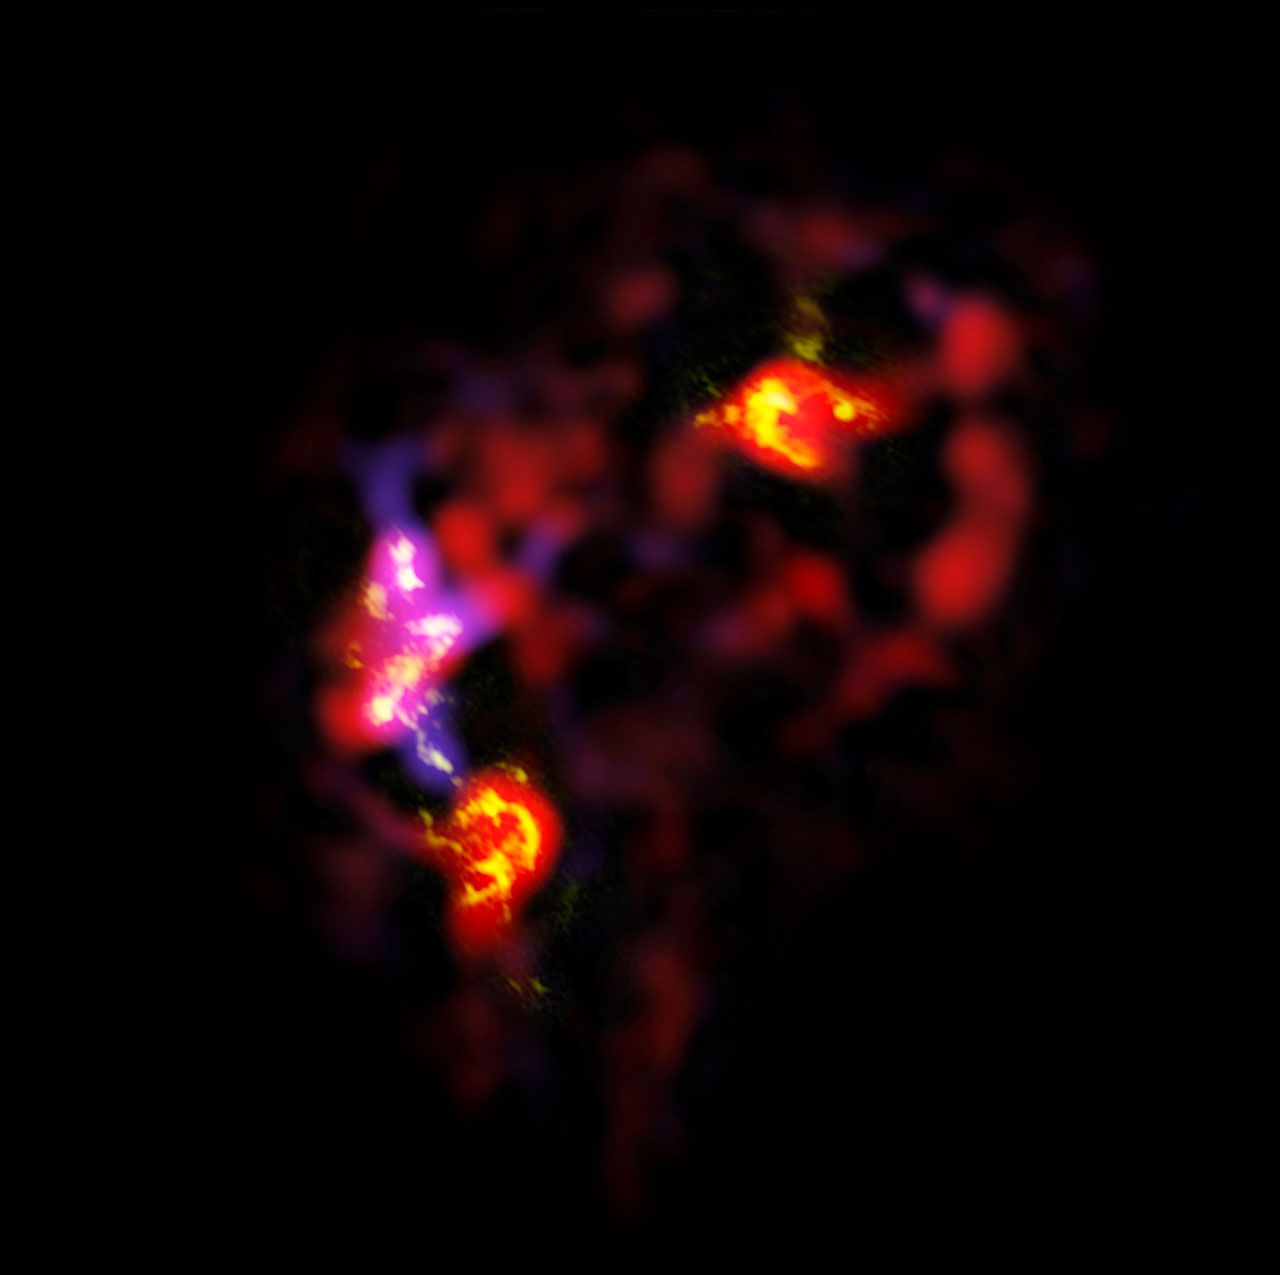 antenna galaxies seen by ALMA